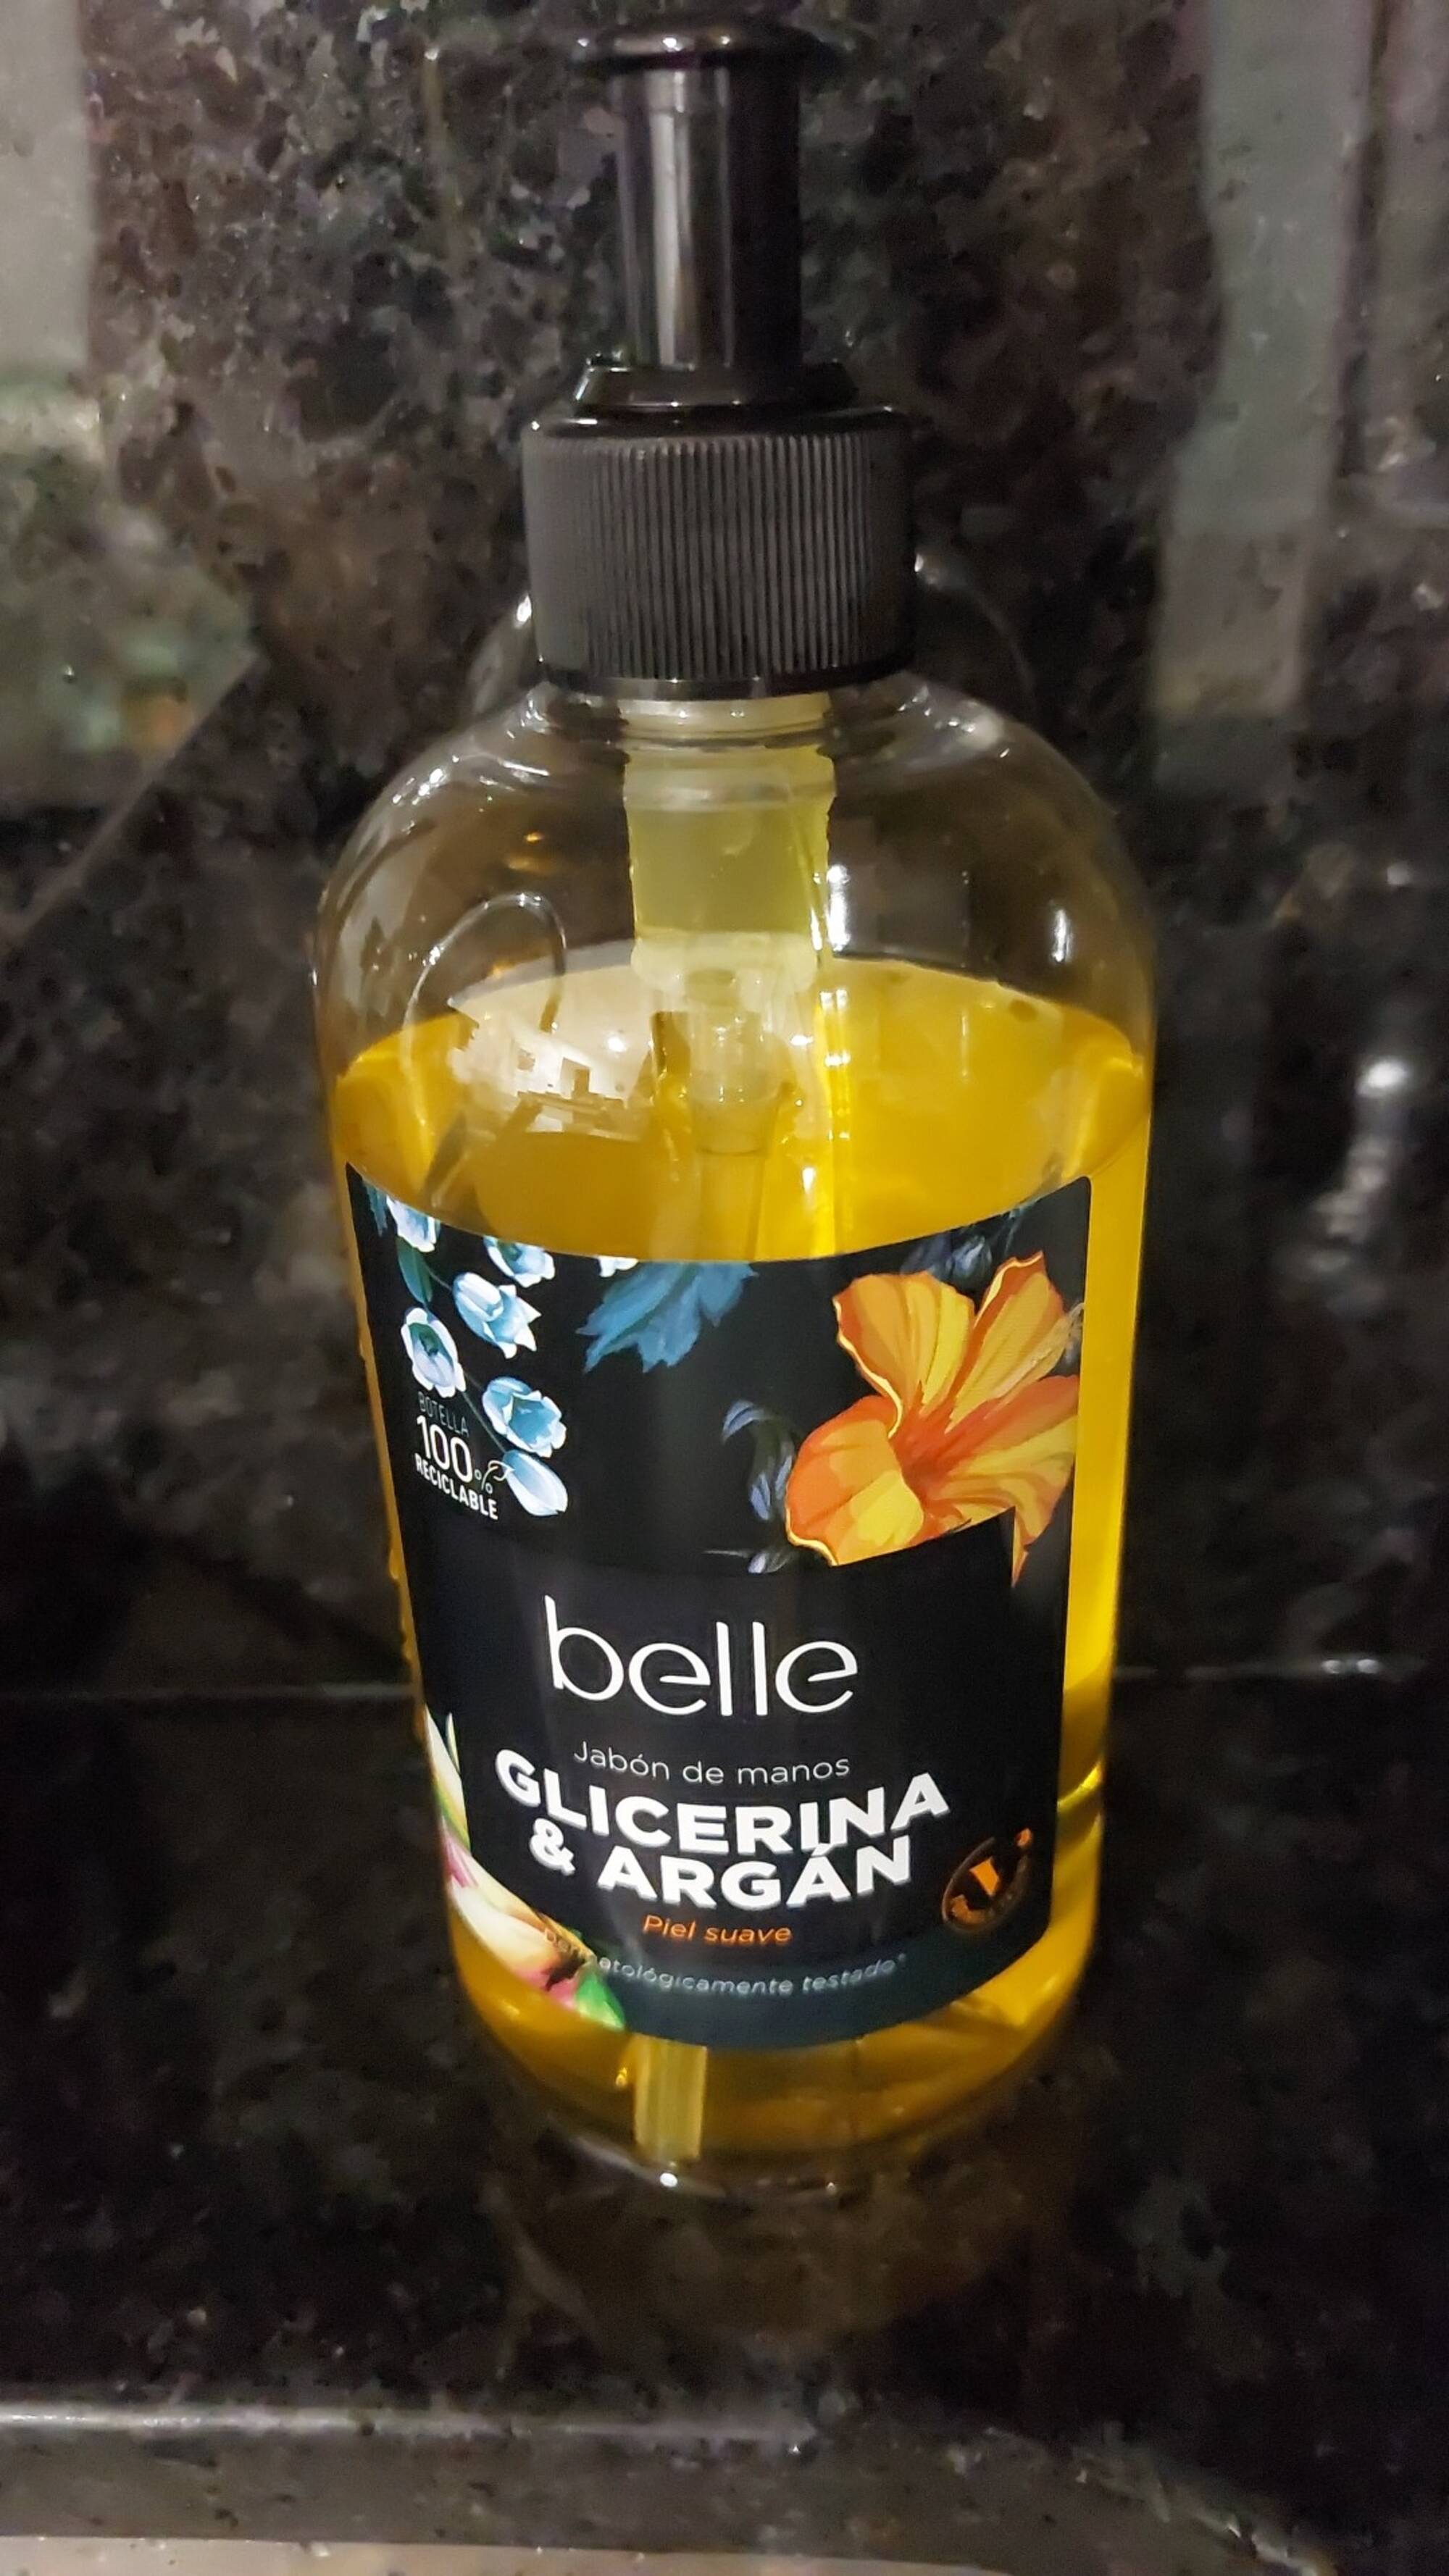 BELLE - Jabón de manos glicerina & argan 